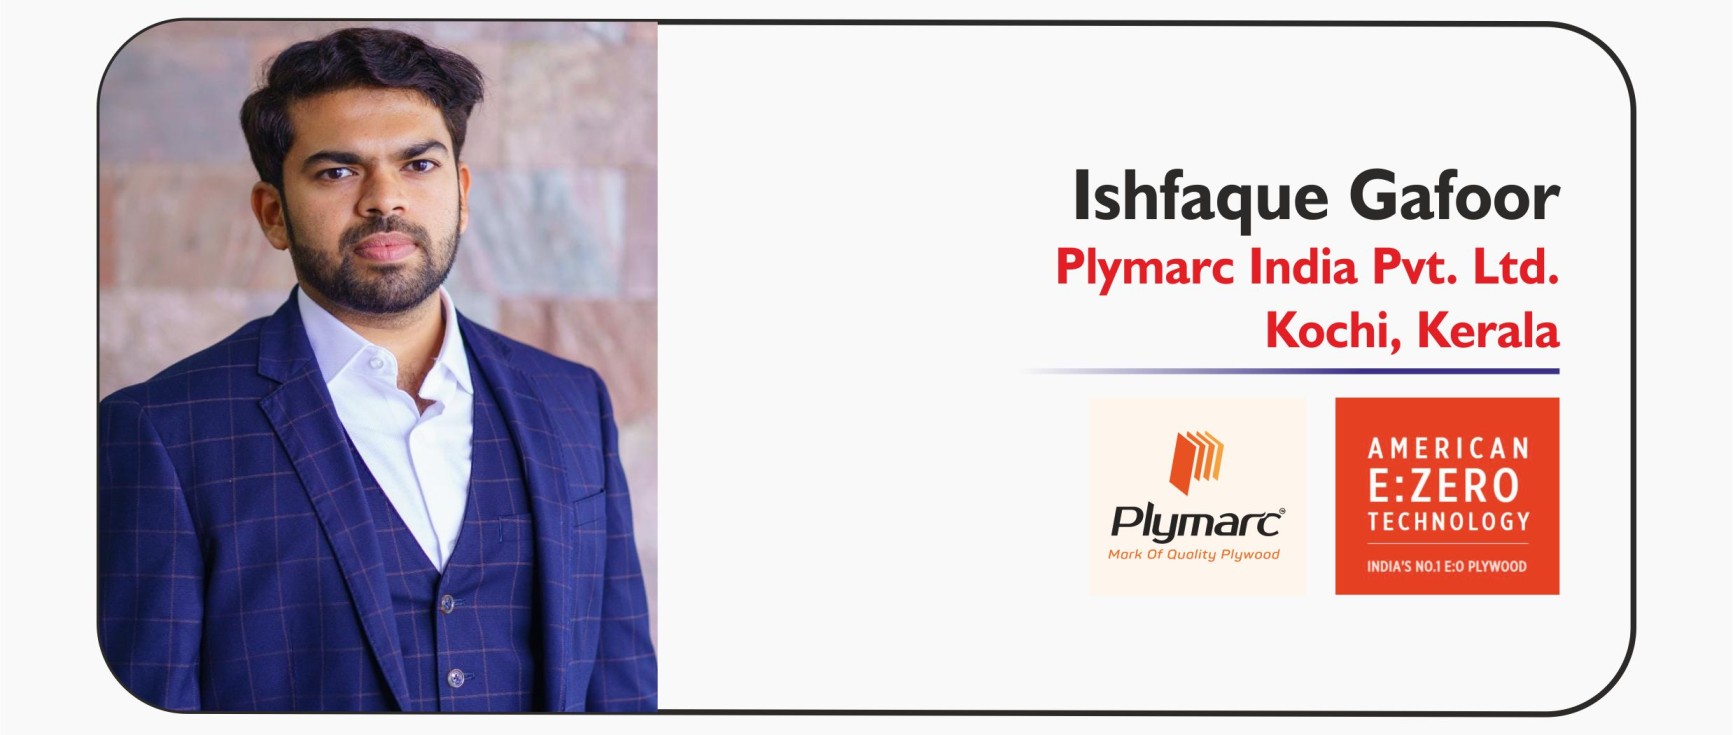 Ishfaque Gafoor - Plymarc India Pvt Ltd